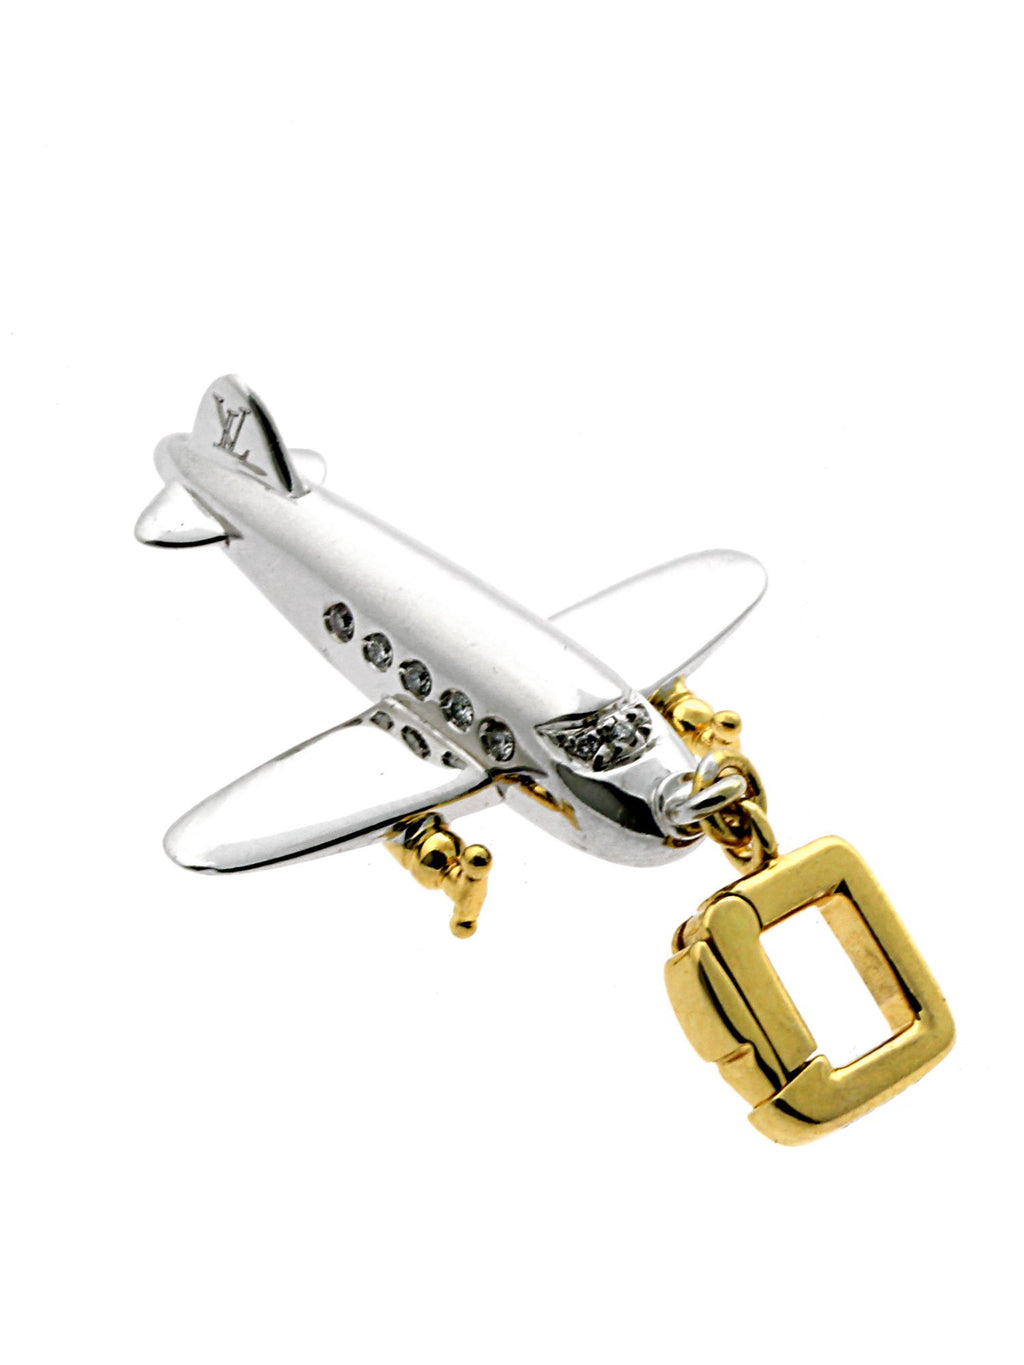 Louis Vuitton LV Plane Necklace - Silver-Tone Metal Pendant